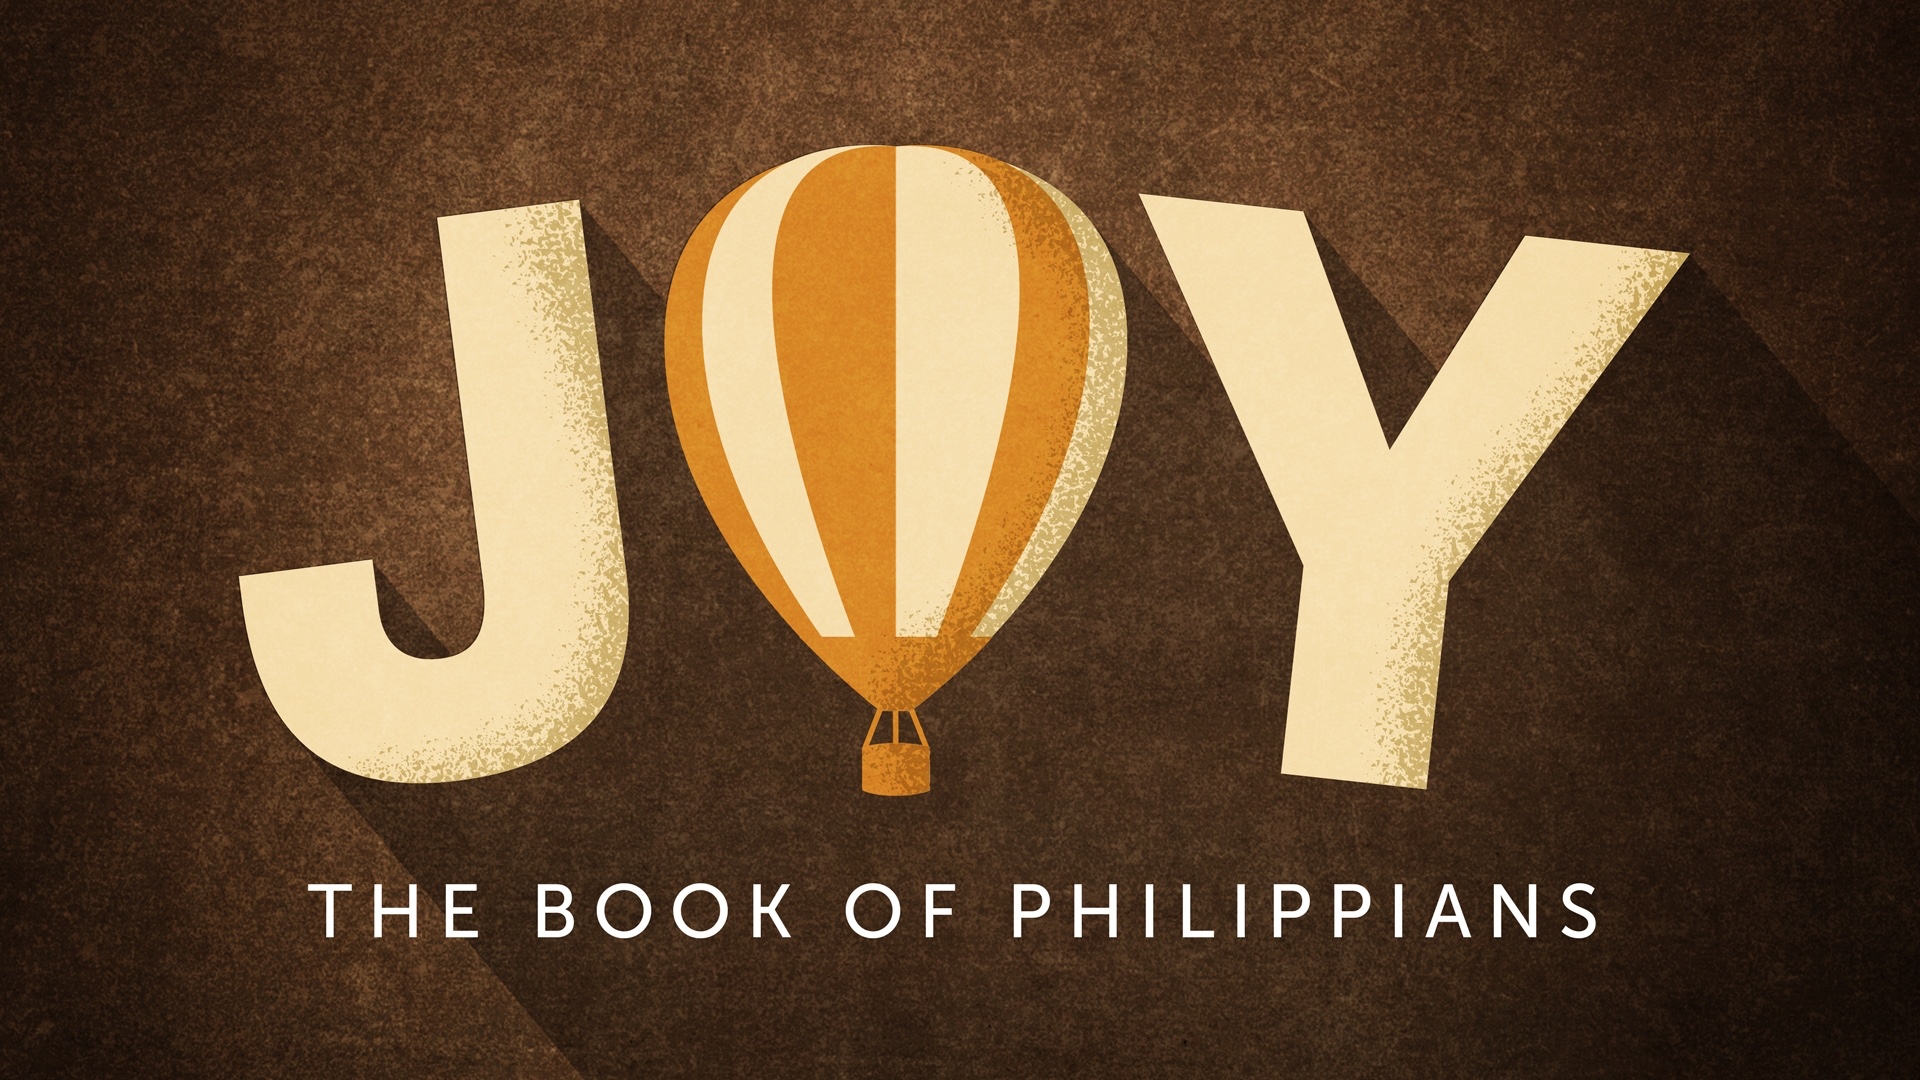 Joy: The Book of Philippians - Finding Joy in Genuineness